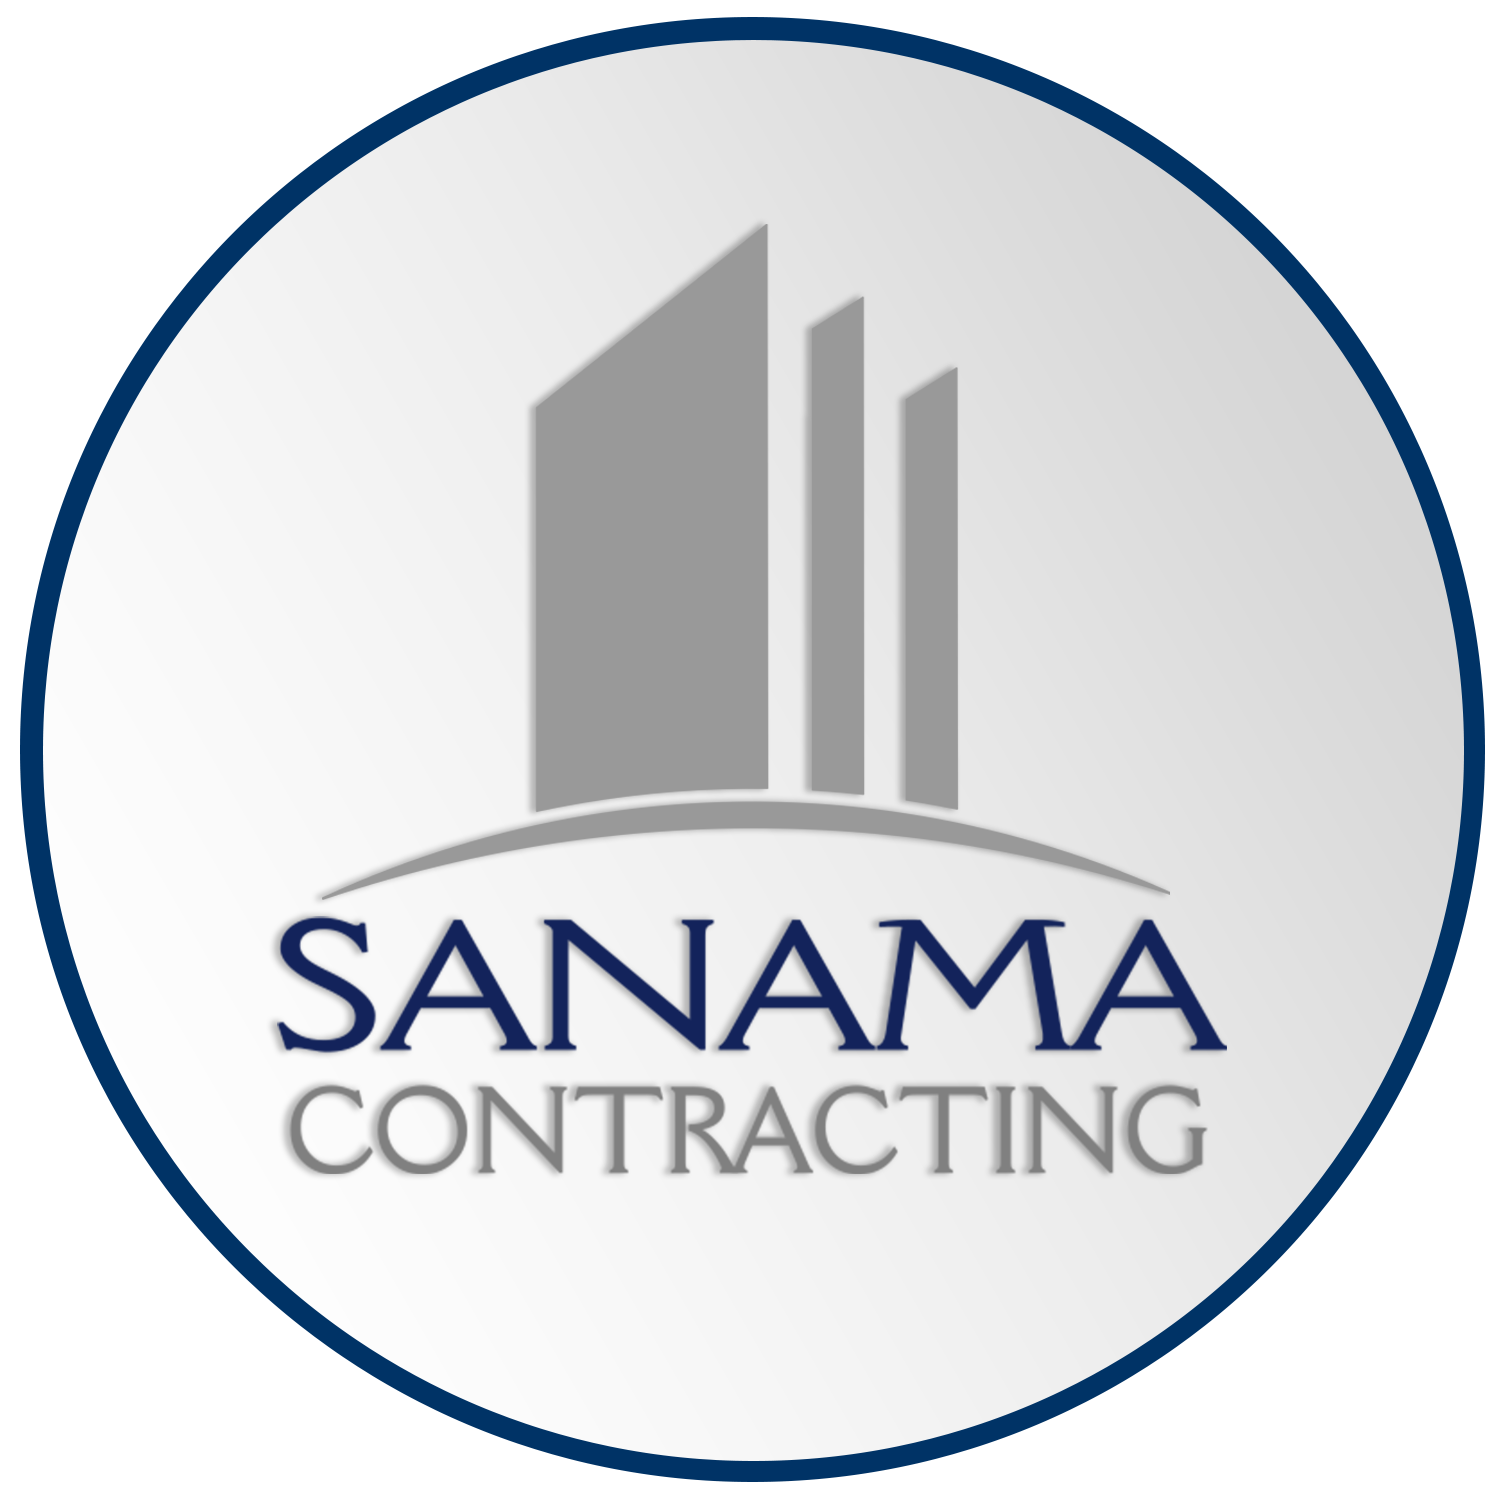 SANAMA Contracting Co